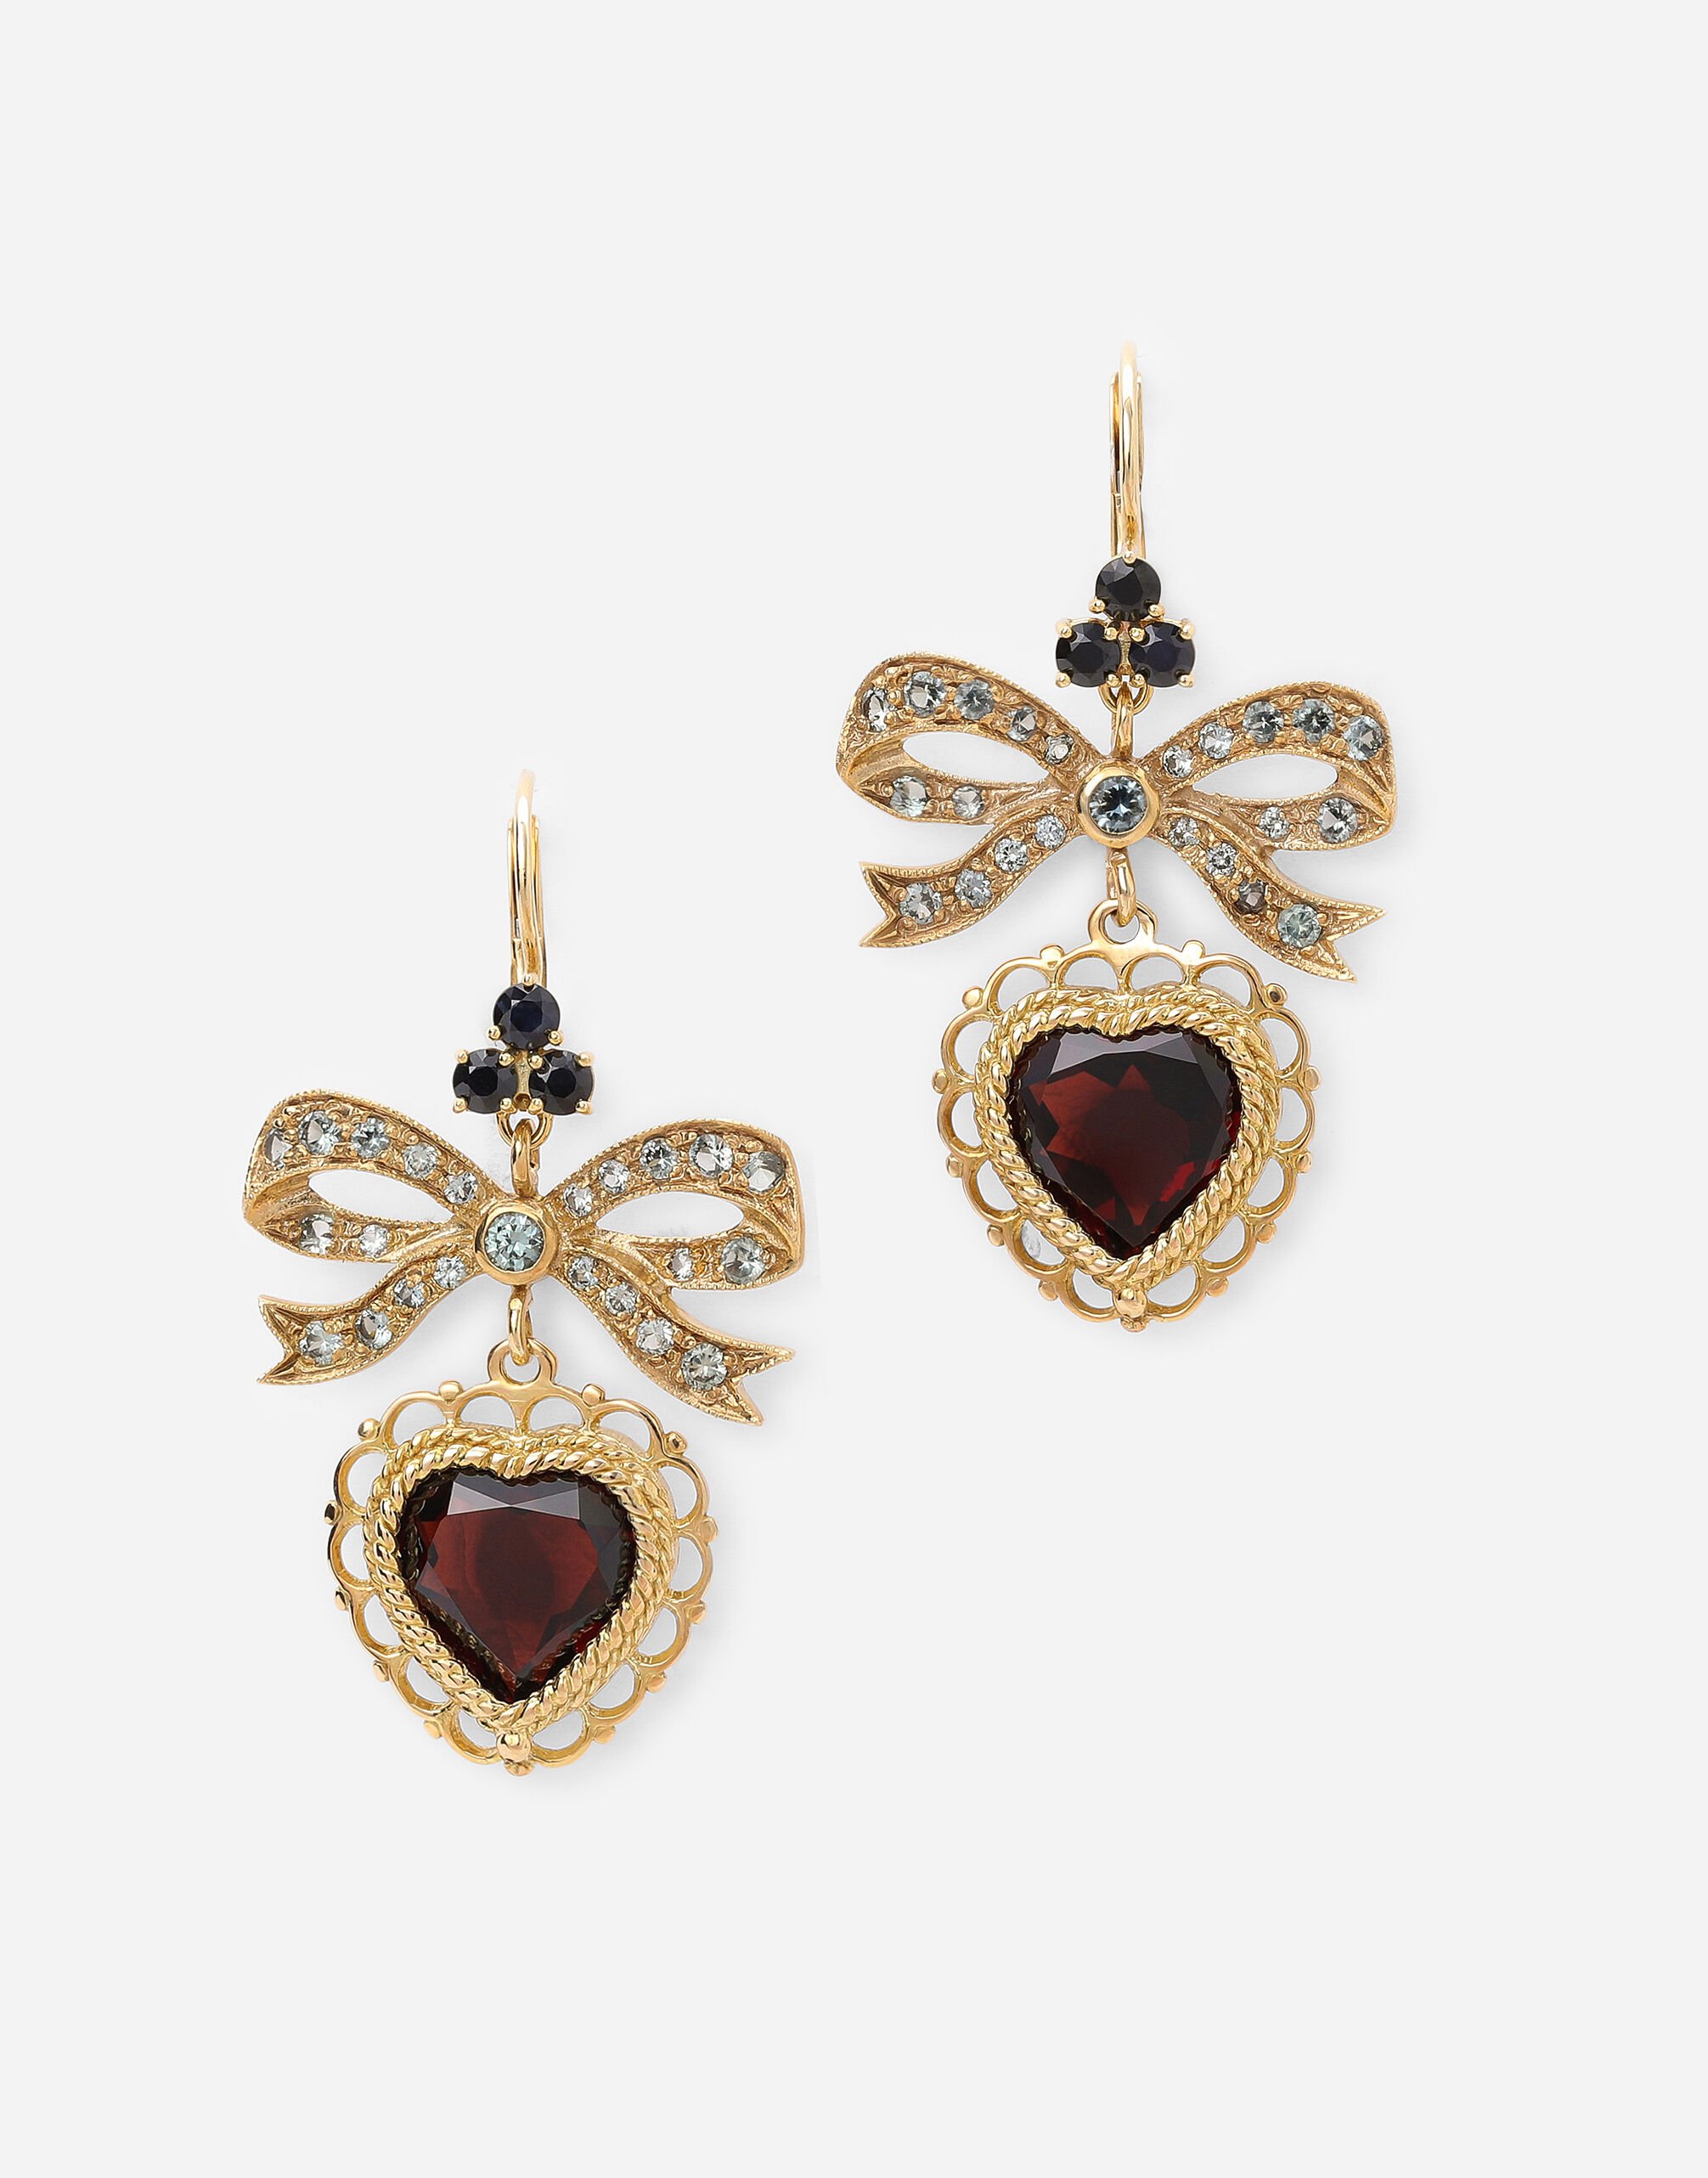 Dolce & Gabbana Heart leverback earrings in yellow 18kt gold with rhodolite garnet heart Yellow Gold WNQR1GWMIX1